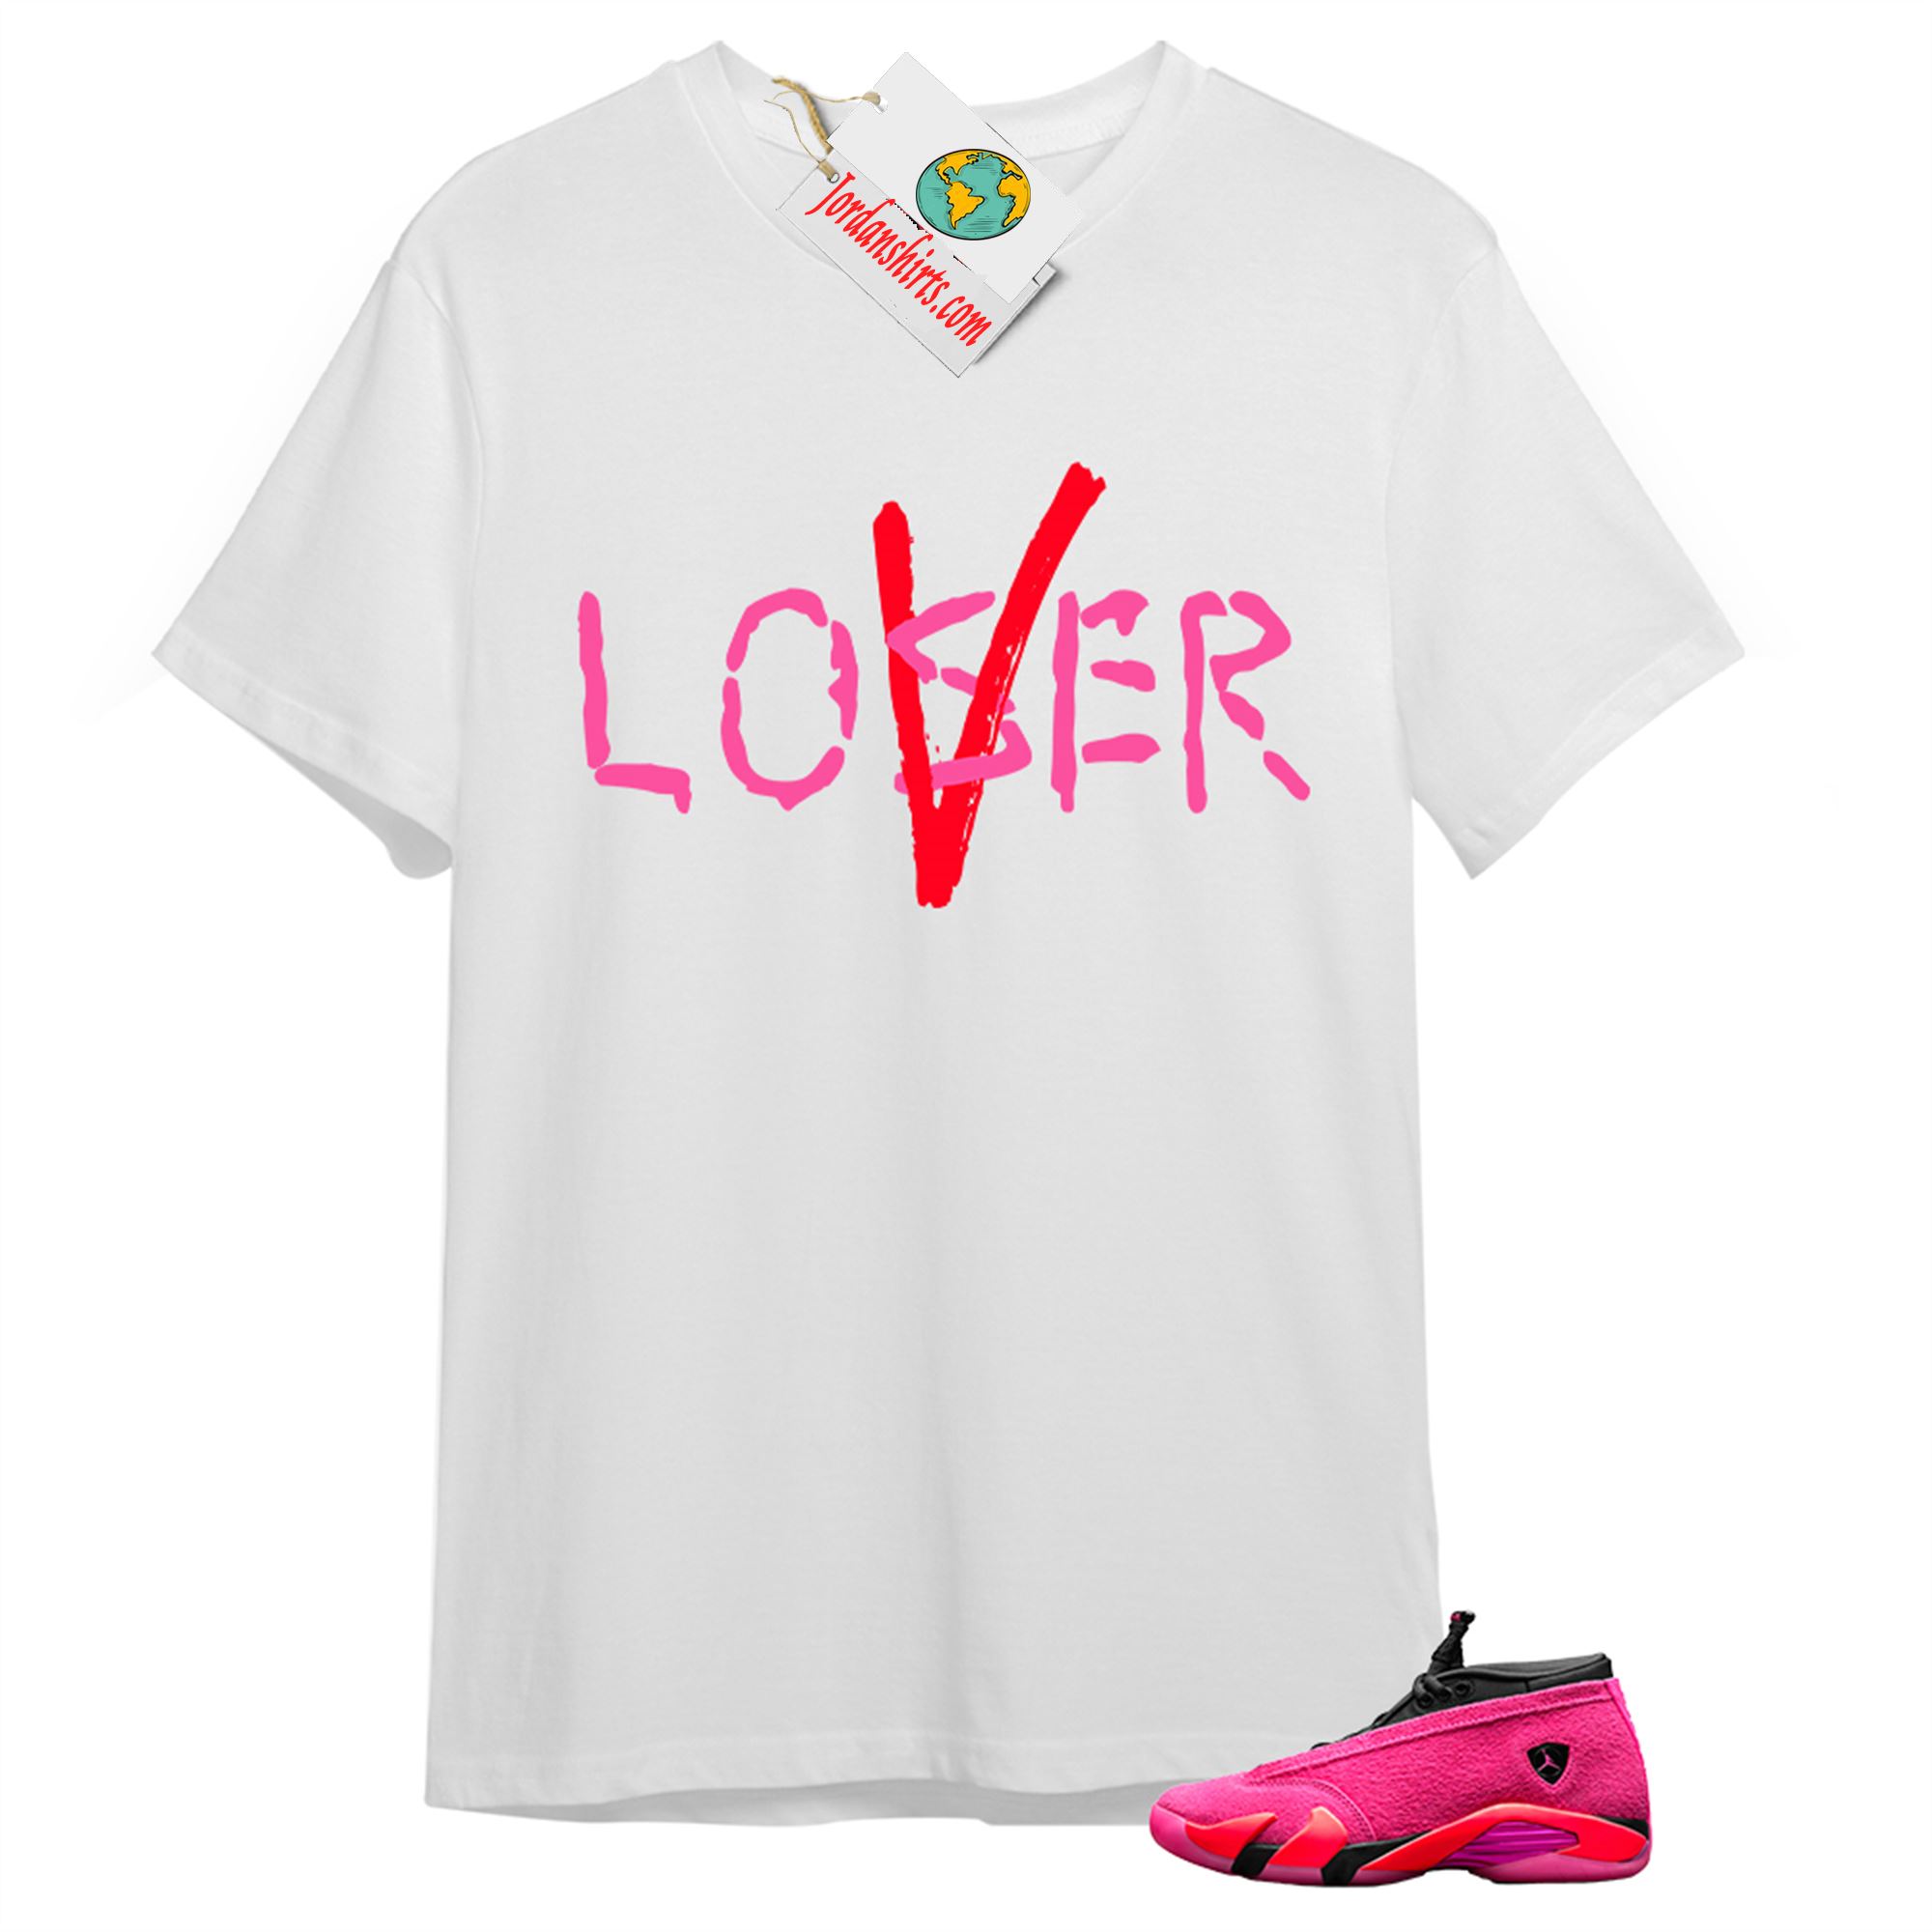 Jordan 14 Shirt, Love A Loser White T-shirt Air Jordan 14 Wmns Shocking Pink 14s Full Size Up To 5xl